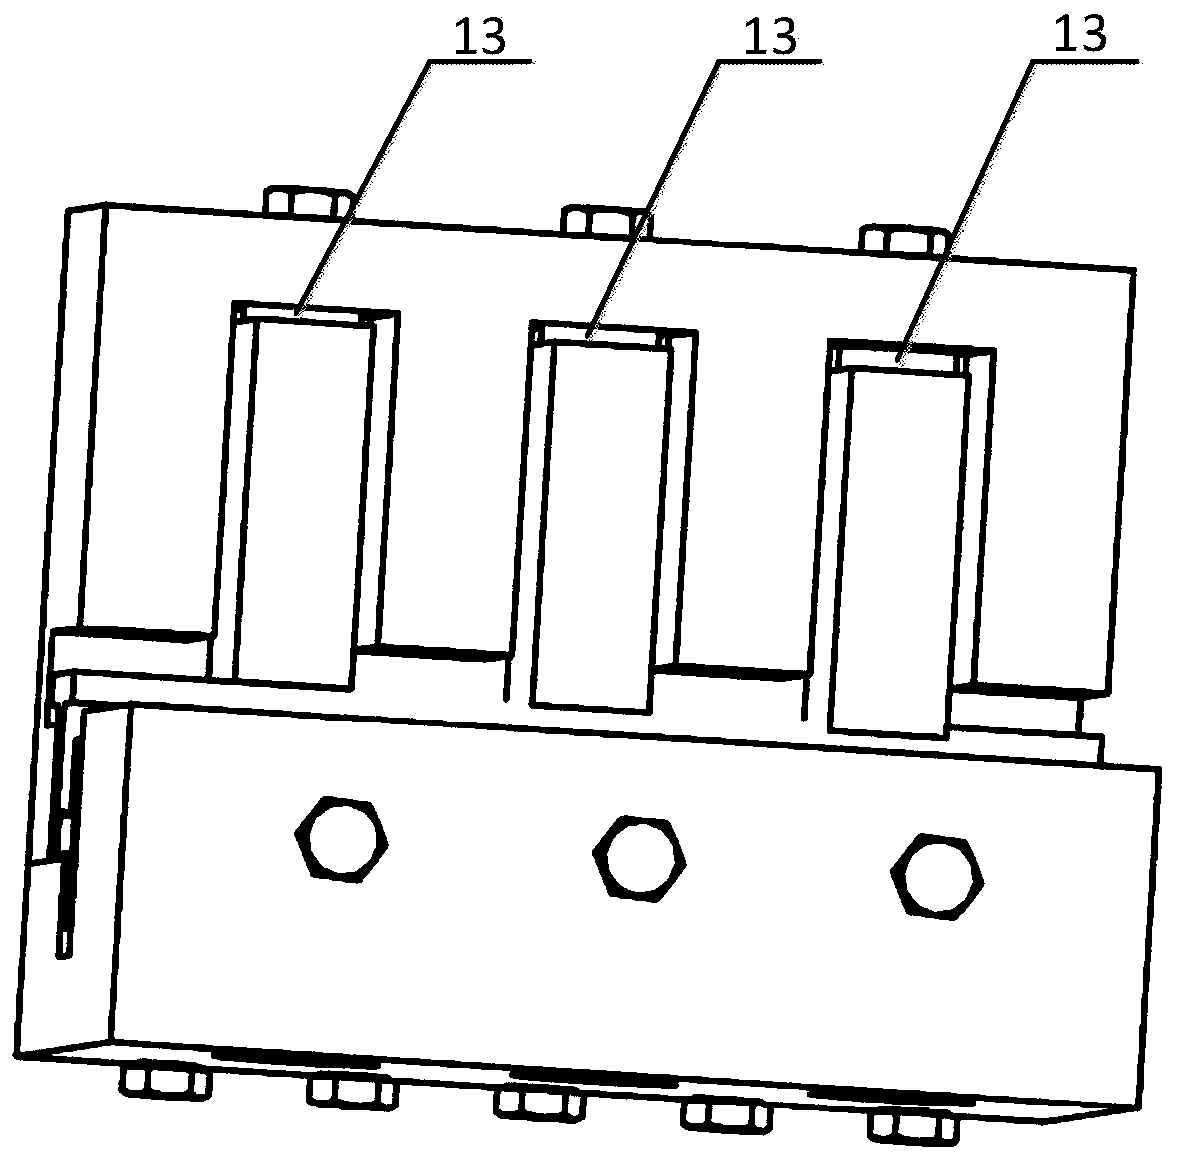 Electronic module wedge-shaped packaging slot locking force measuring system